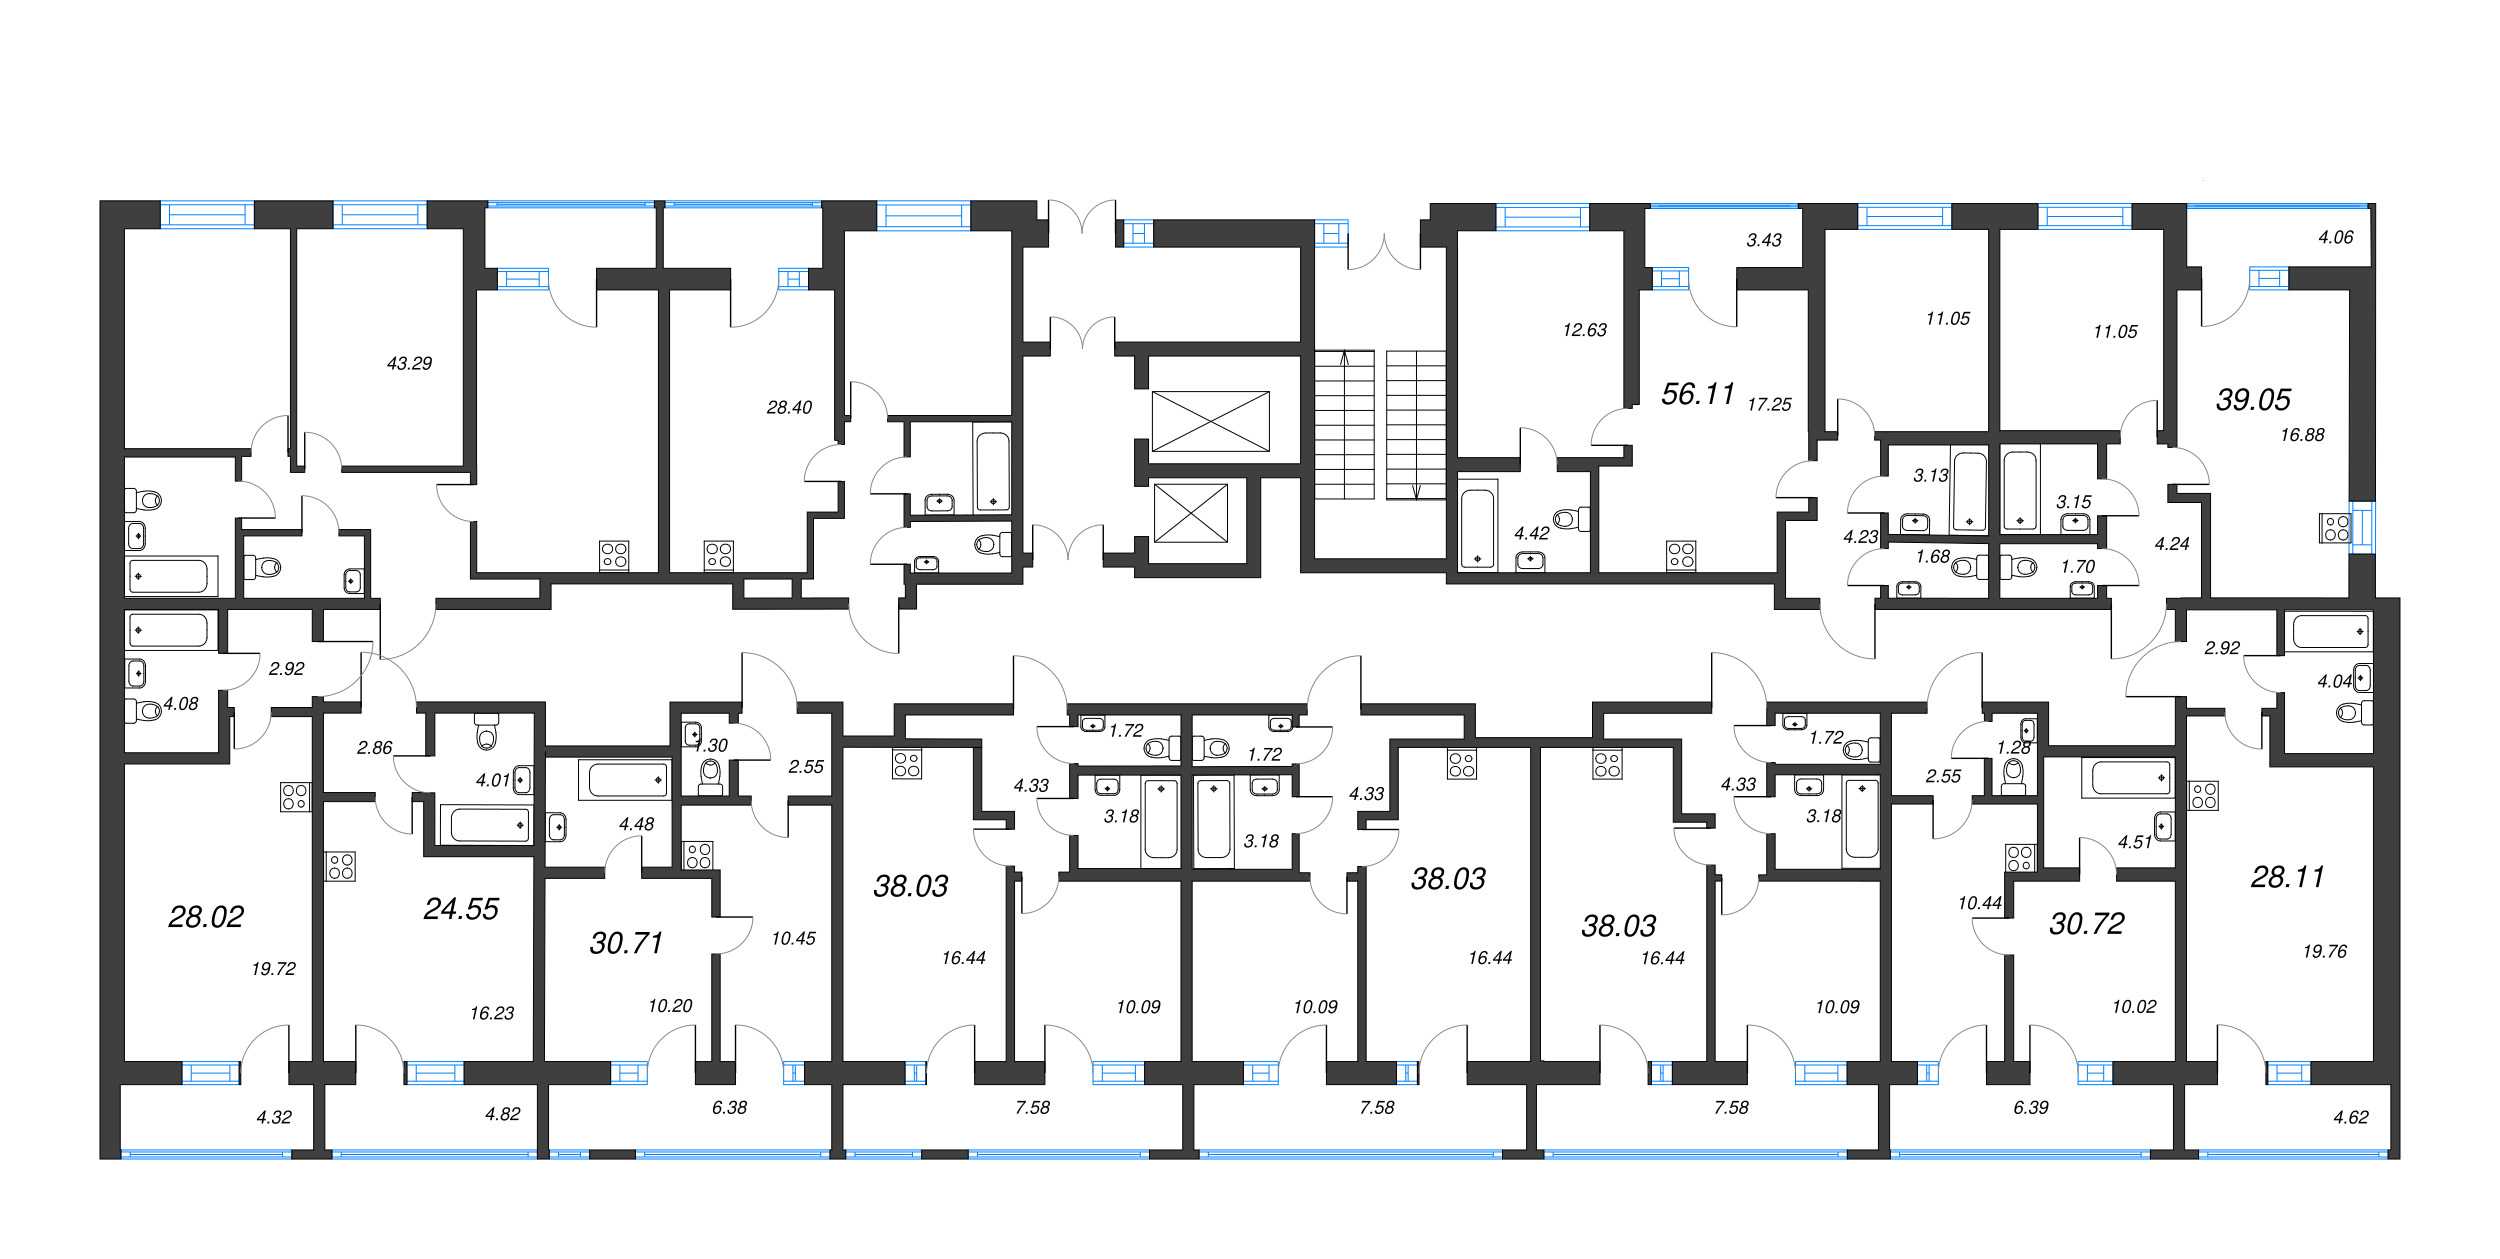 2-комнатная (Евро) квартира, 39.05 м² - планировка этажа